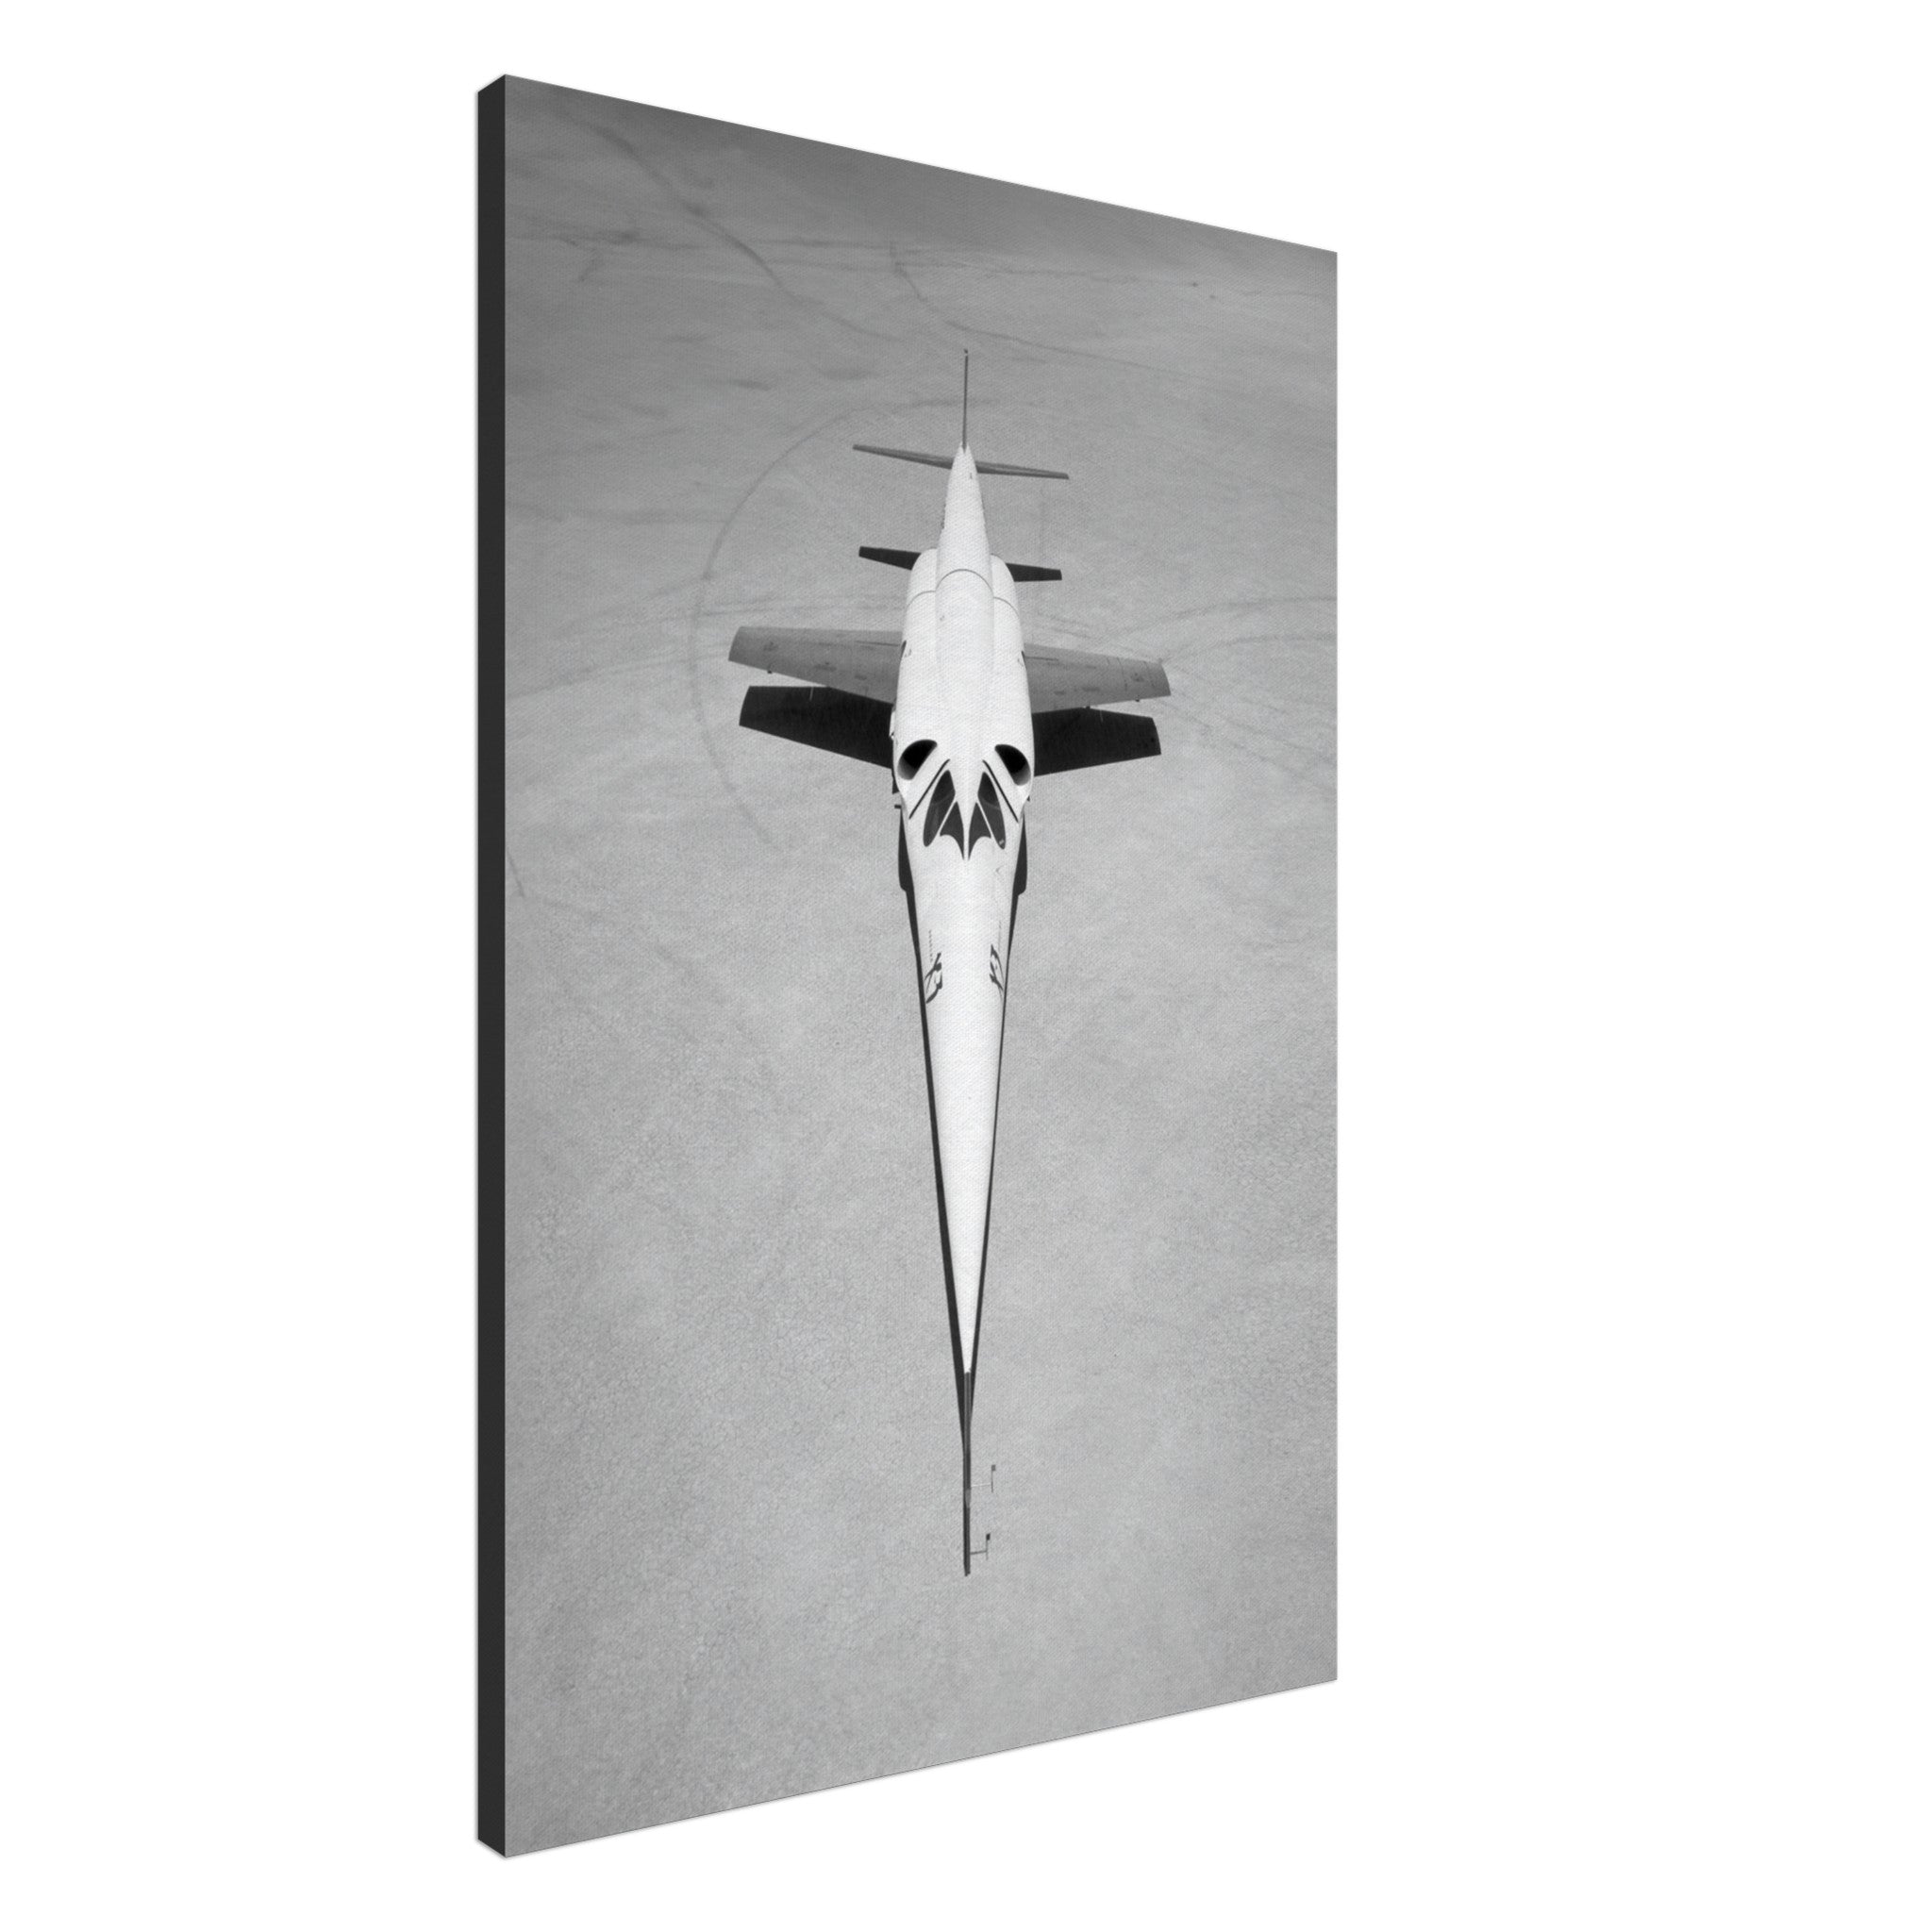 X-3 "Stiletto" on Canvas - I Love a Hangar